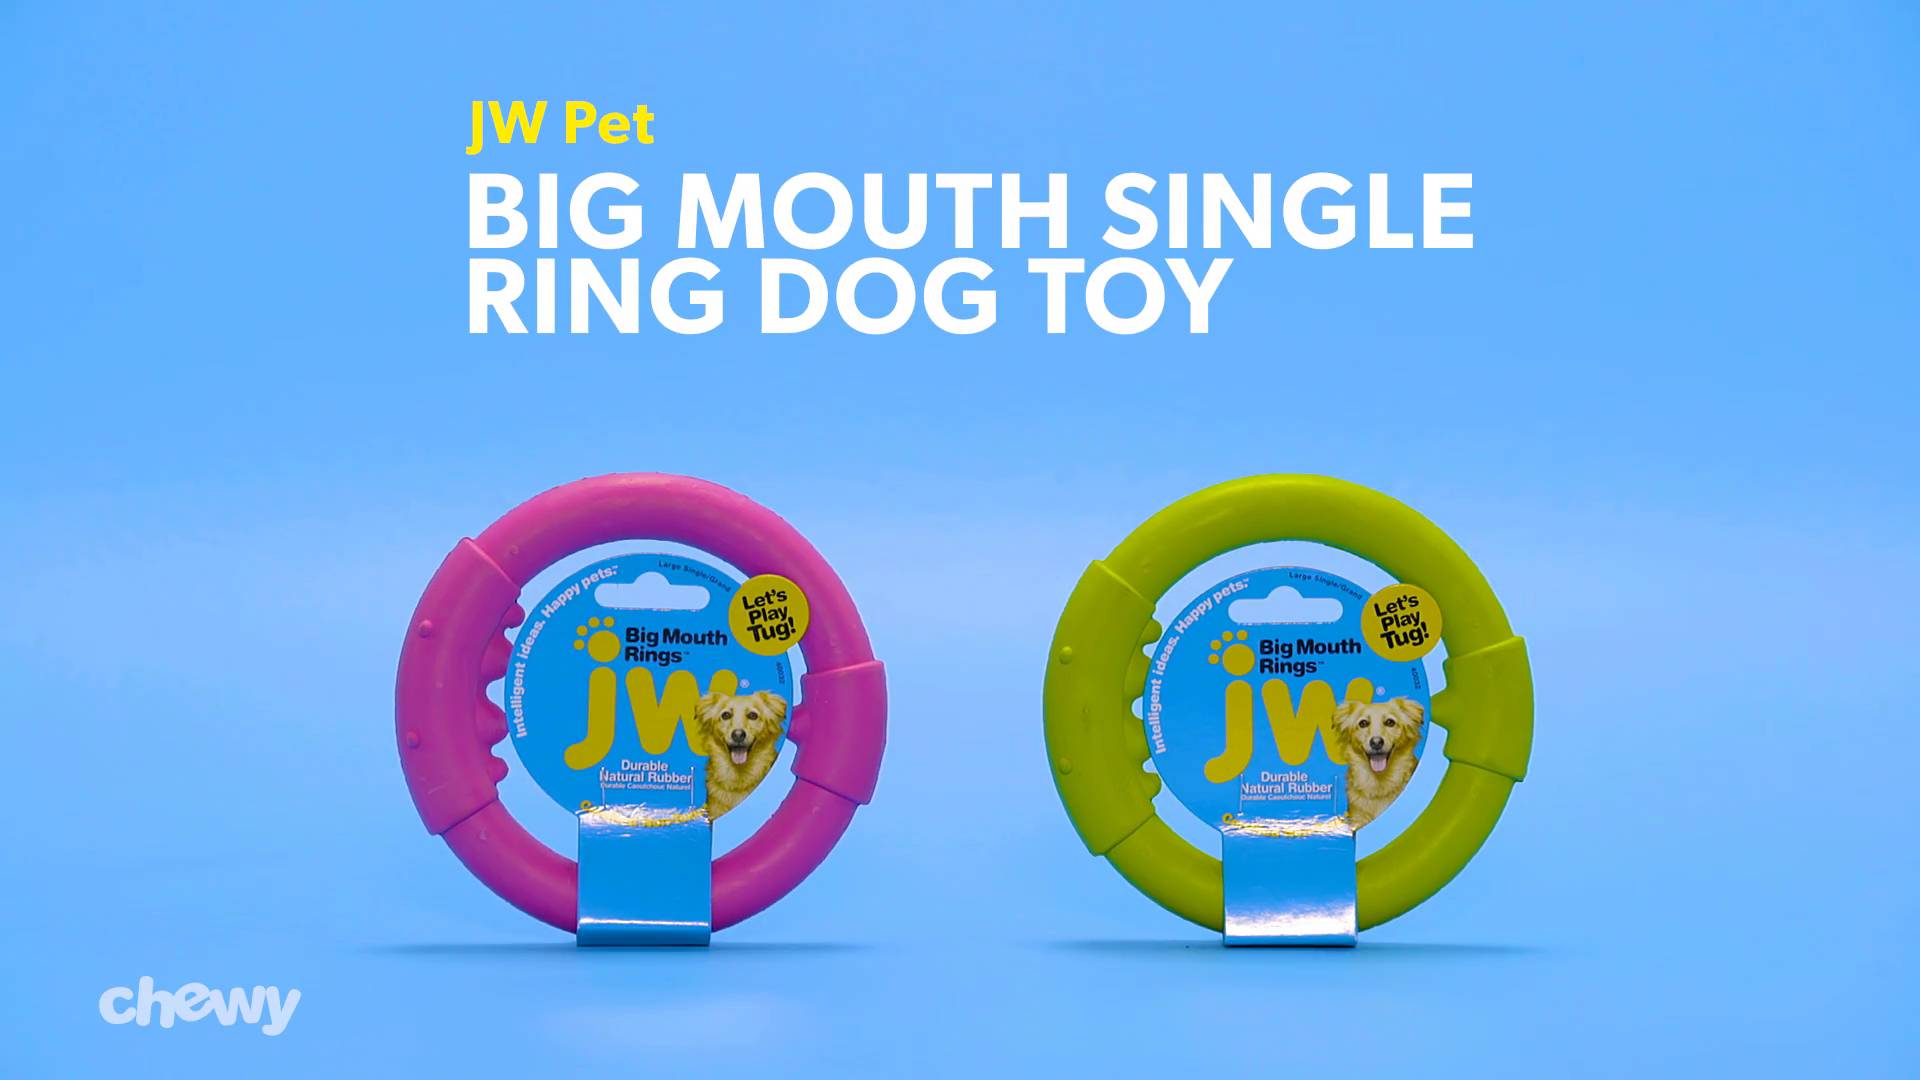 Pet Supplies Jw Pet Big Mouth Rings Toys Chimiochart Gr